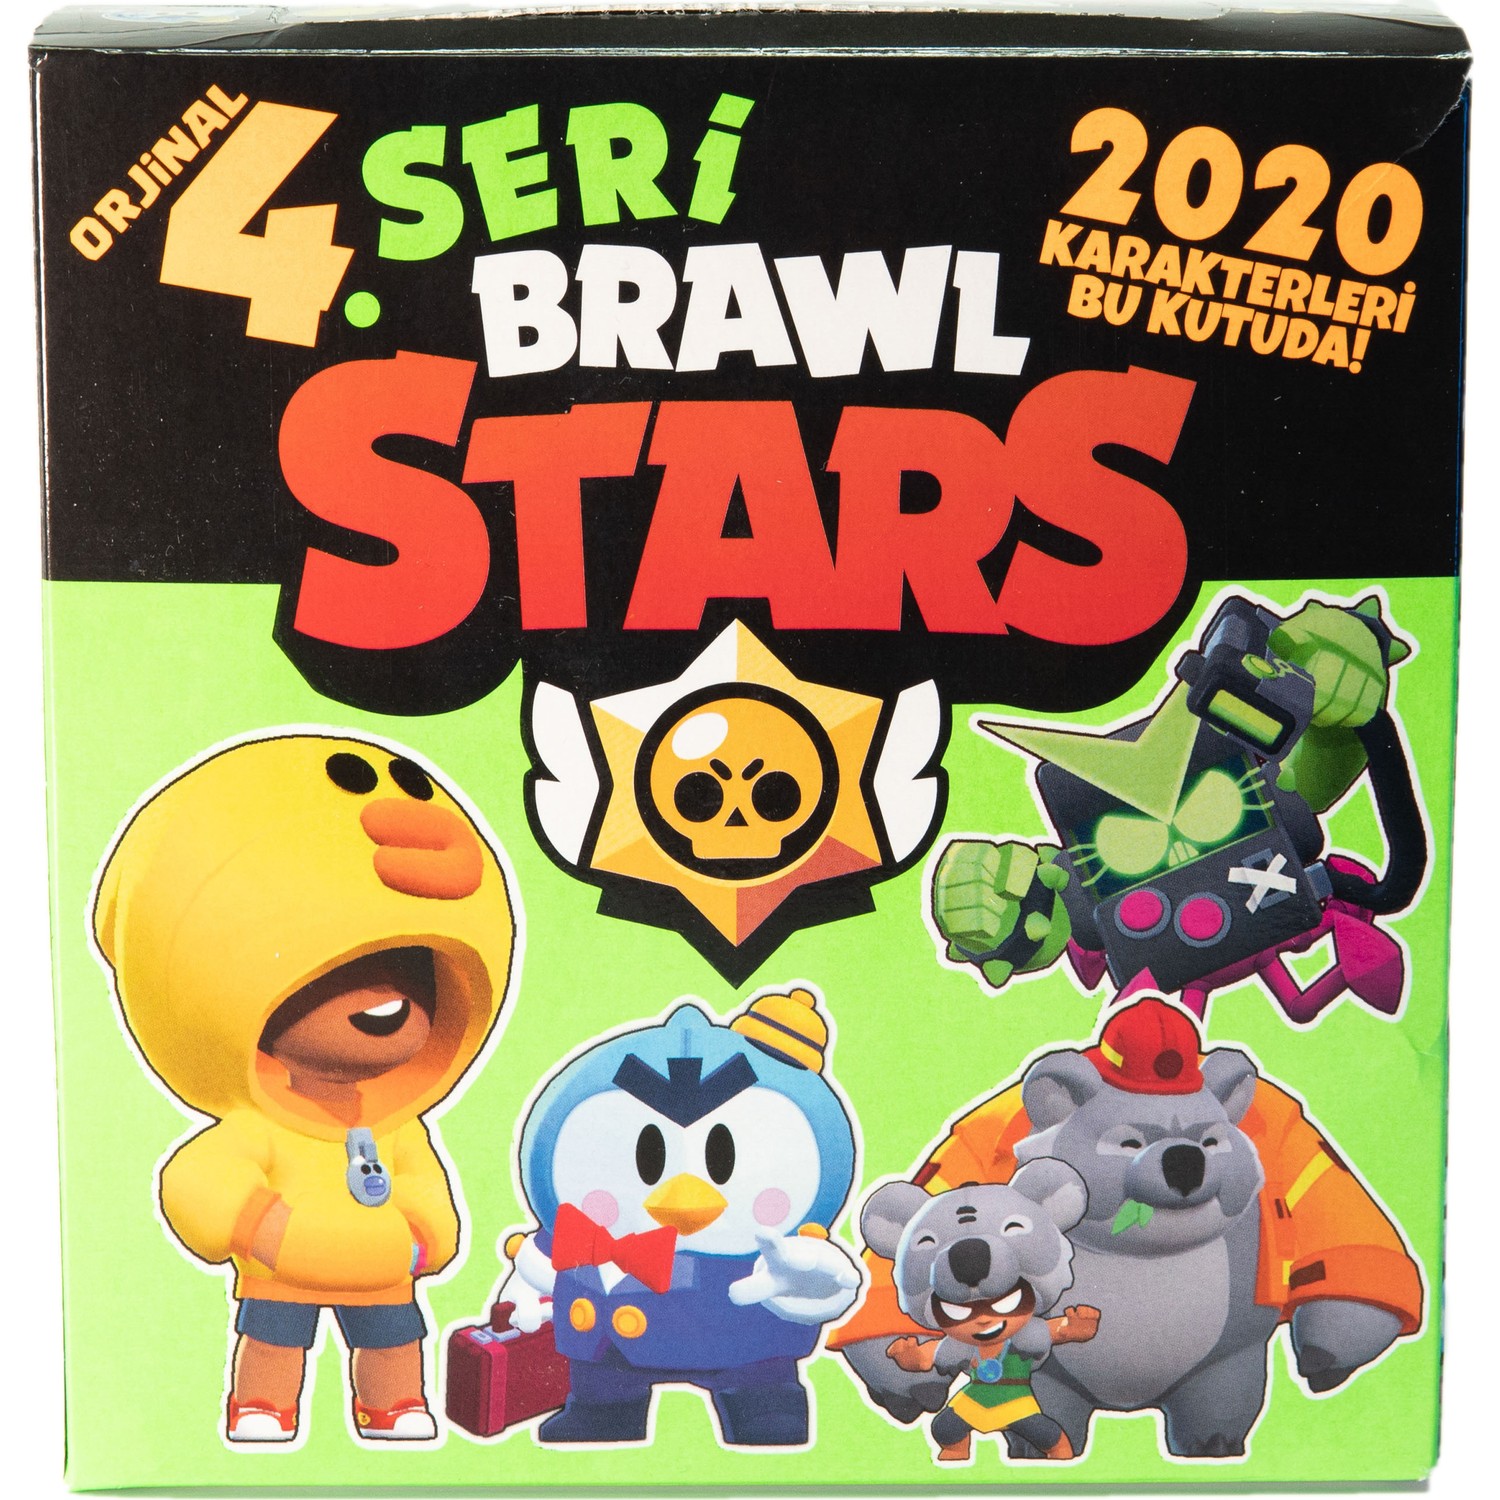 Brawl Stars 4 Seri 2020 Karakterleri Kutu Oyunu 360 Adet Fiyati - brawl stars sezon 4